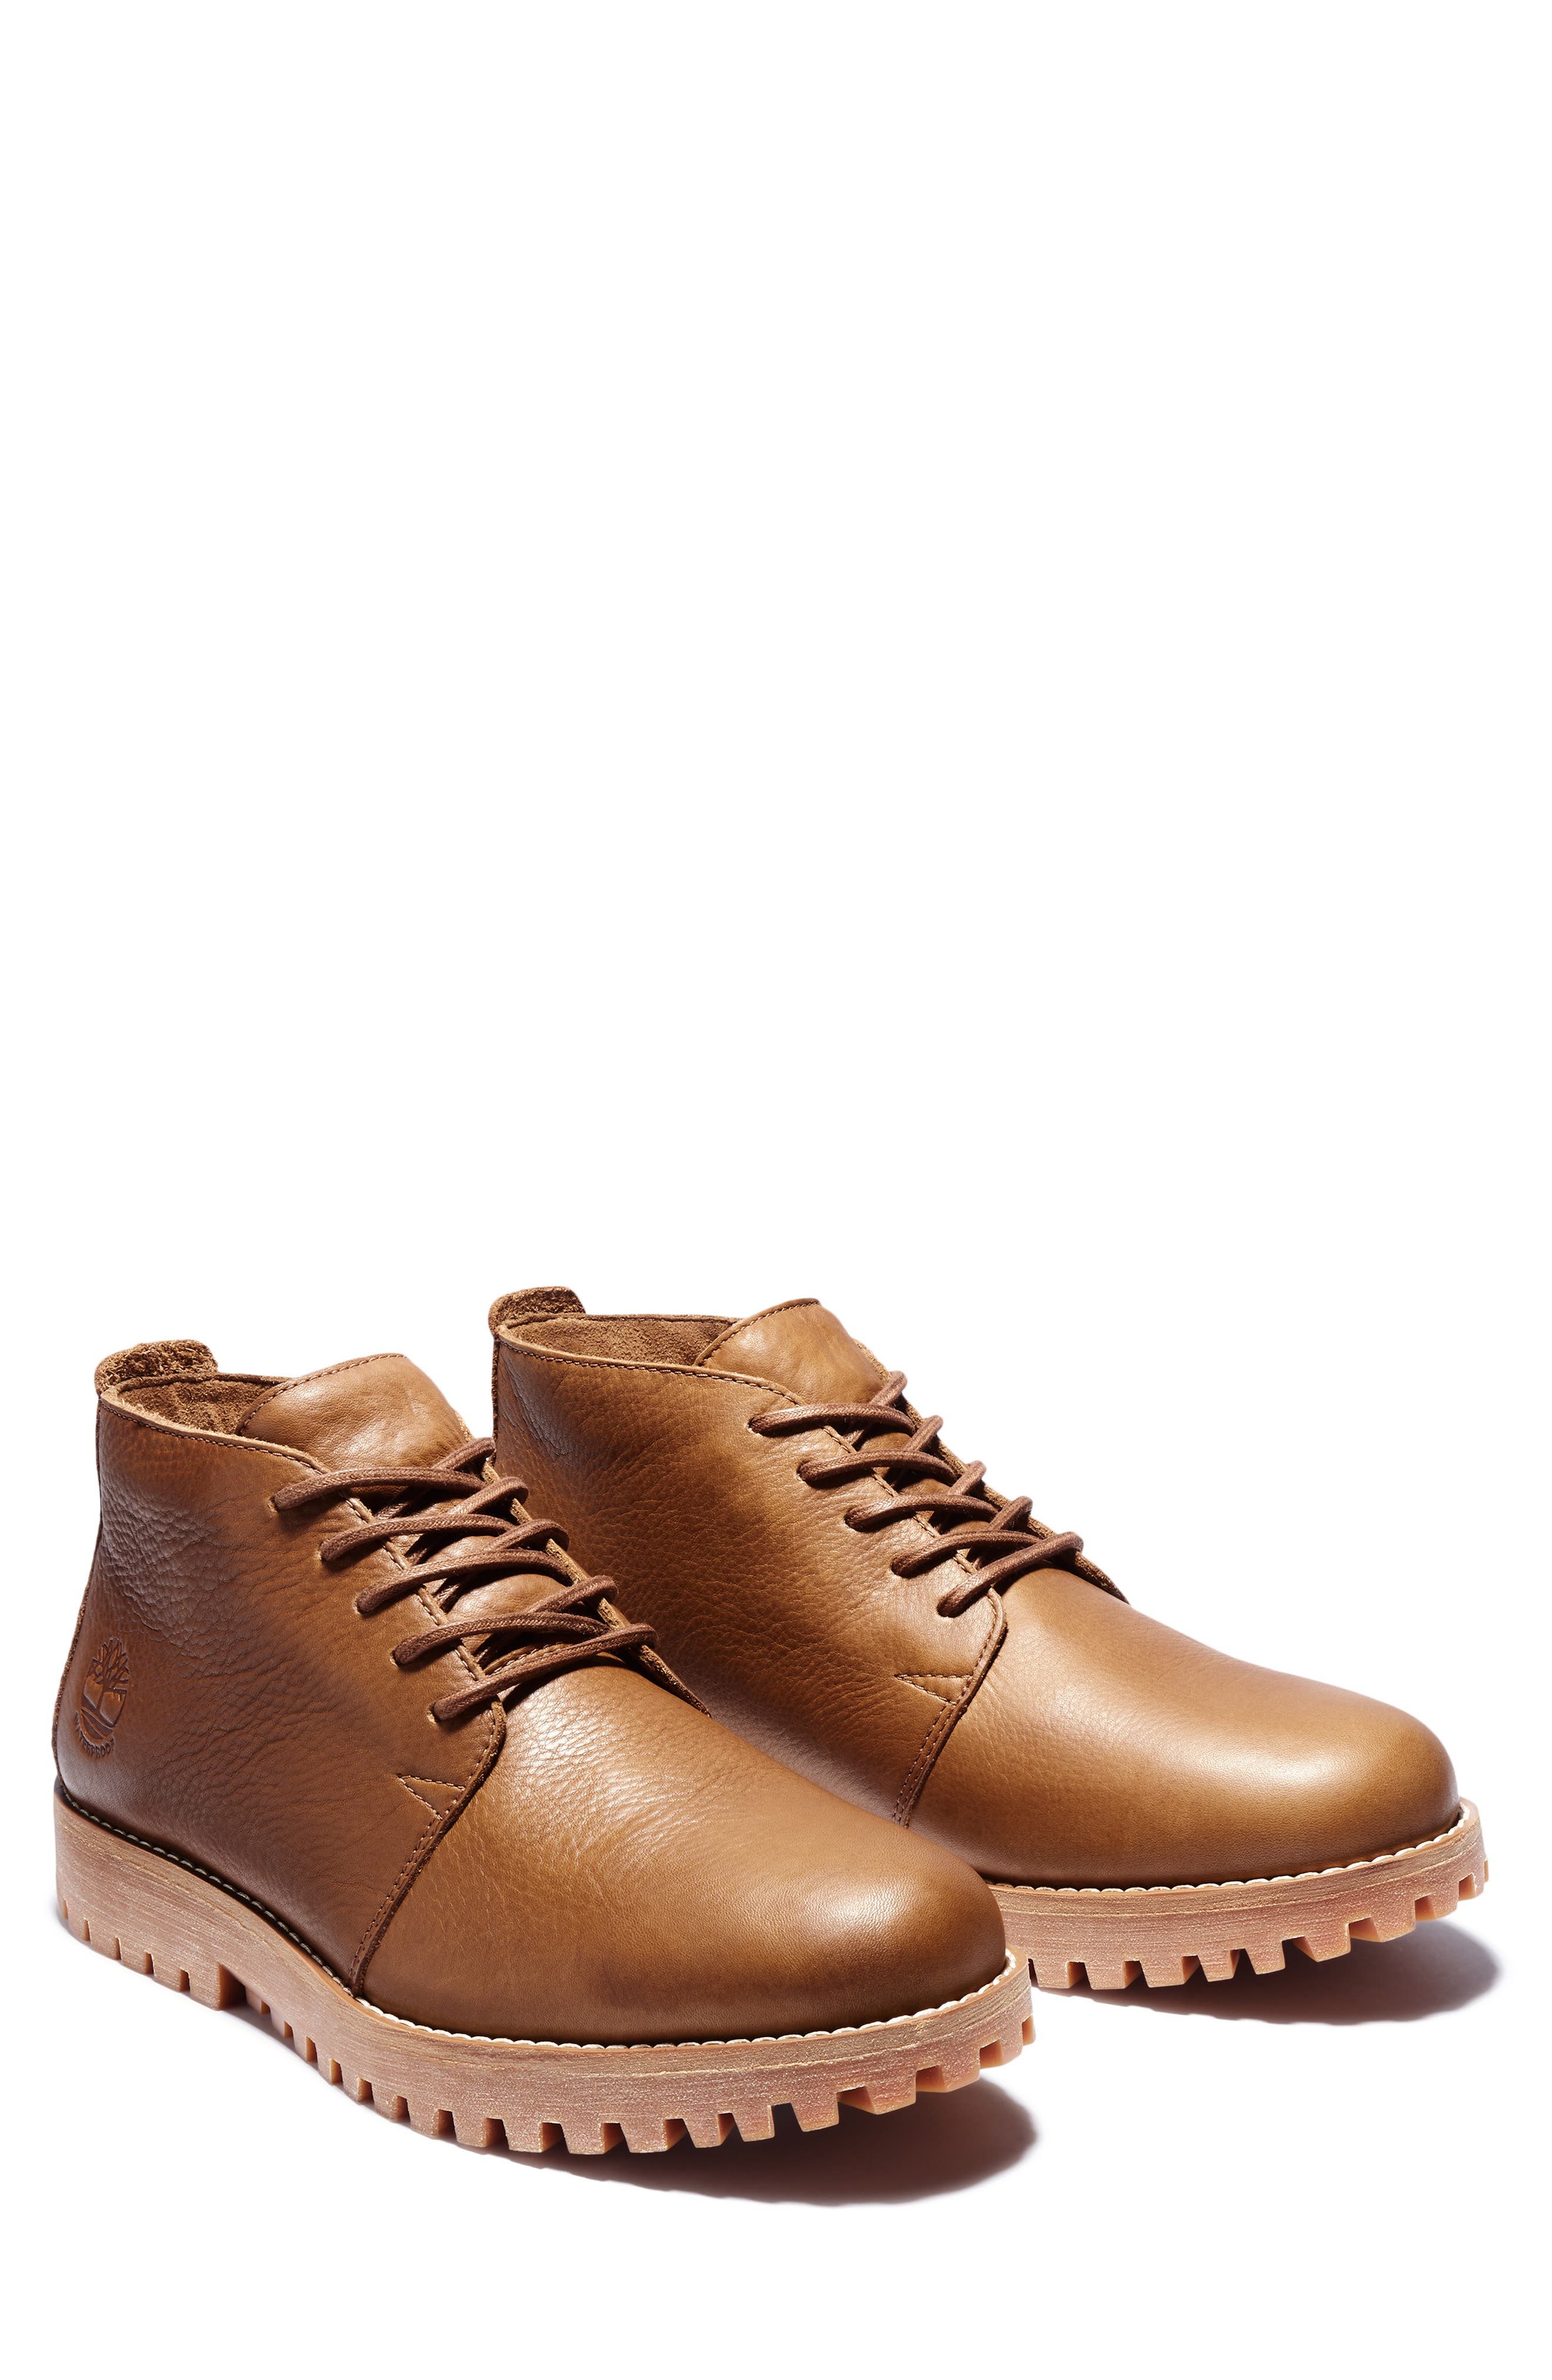 Men's Timberland Chukka Boots | Nordstrom